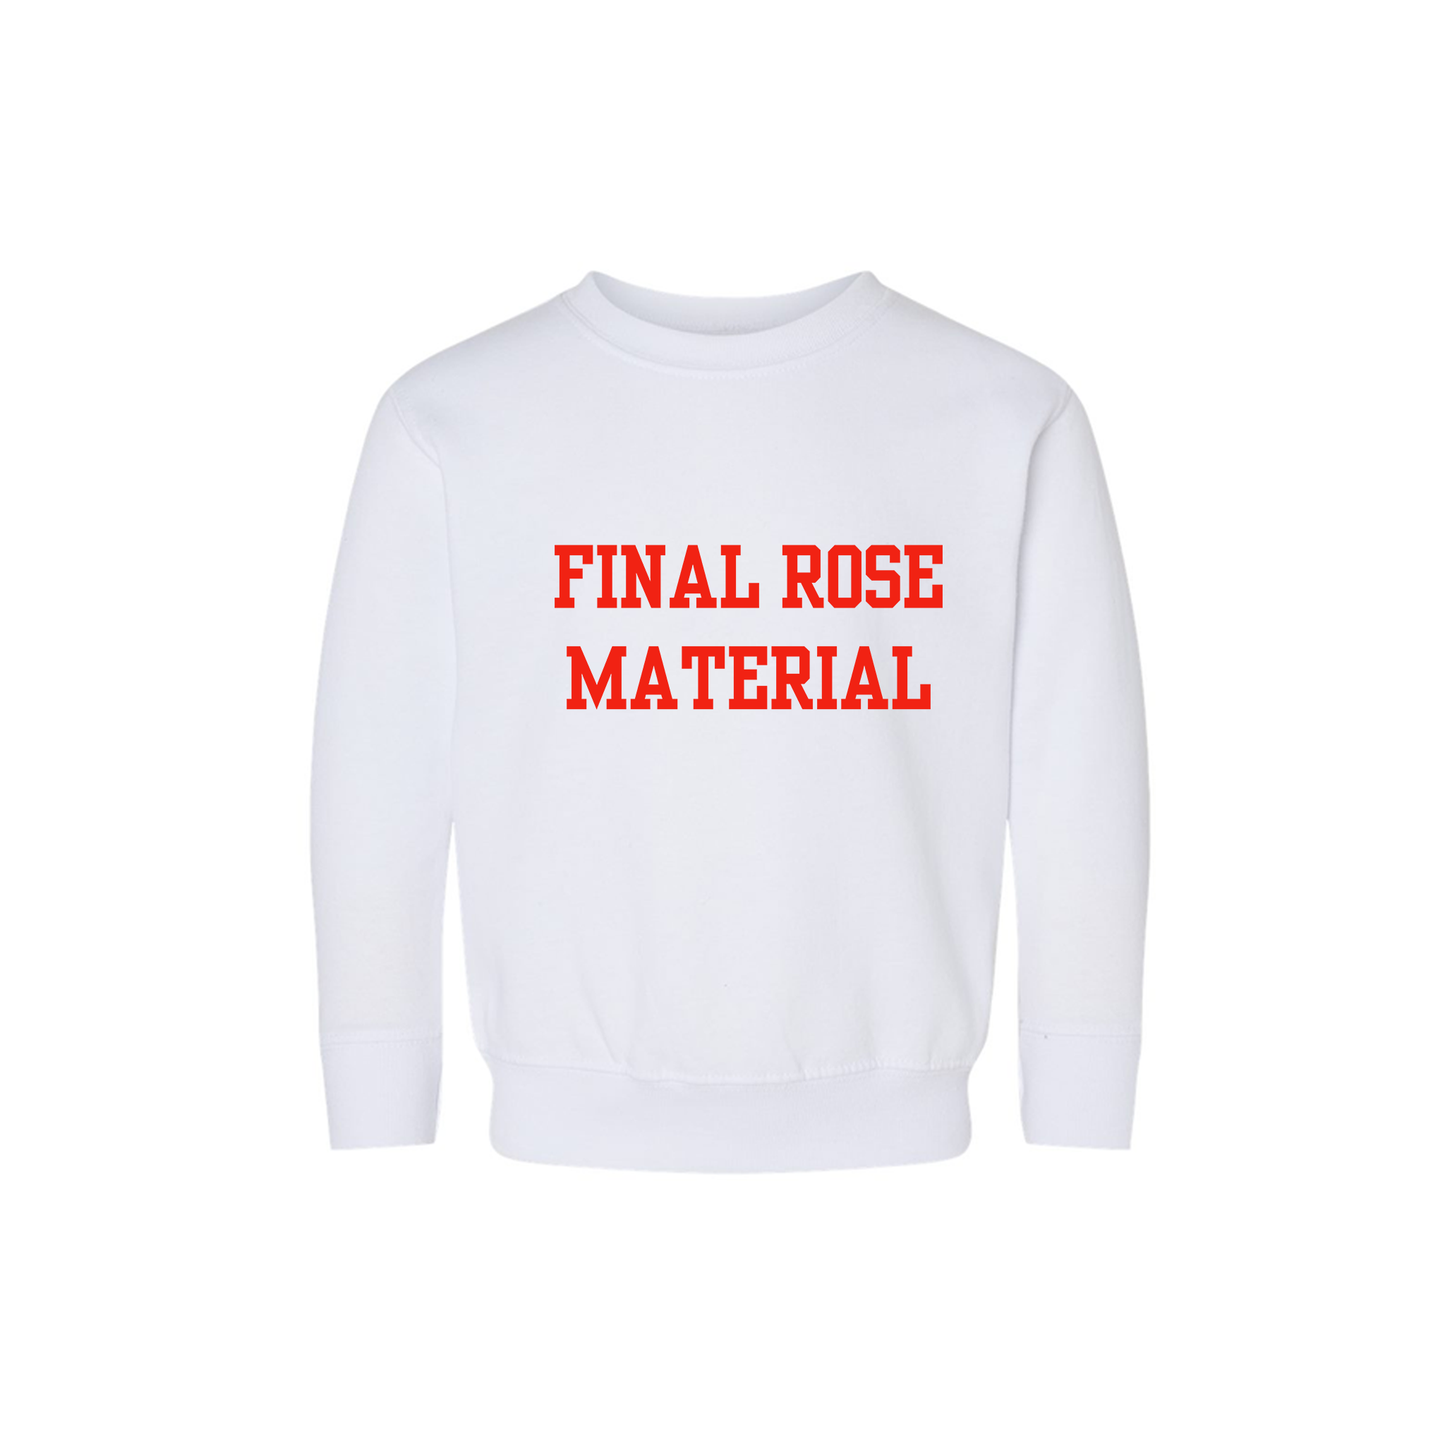 Final Rose Material (Red) - Kids Sweatshirt (White)